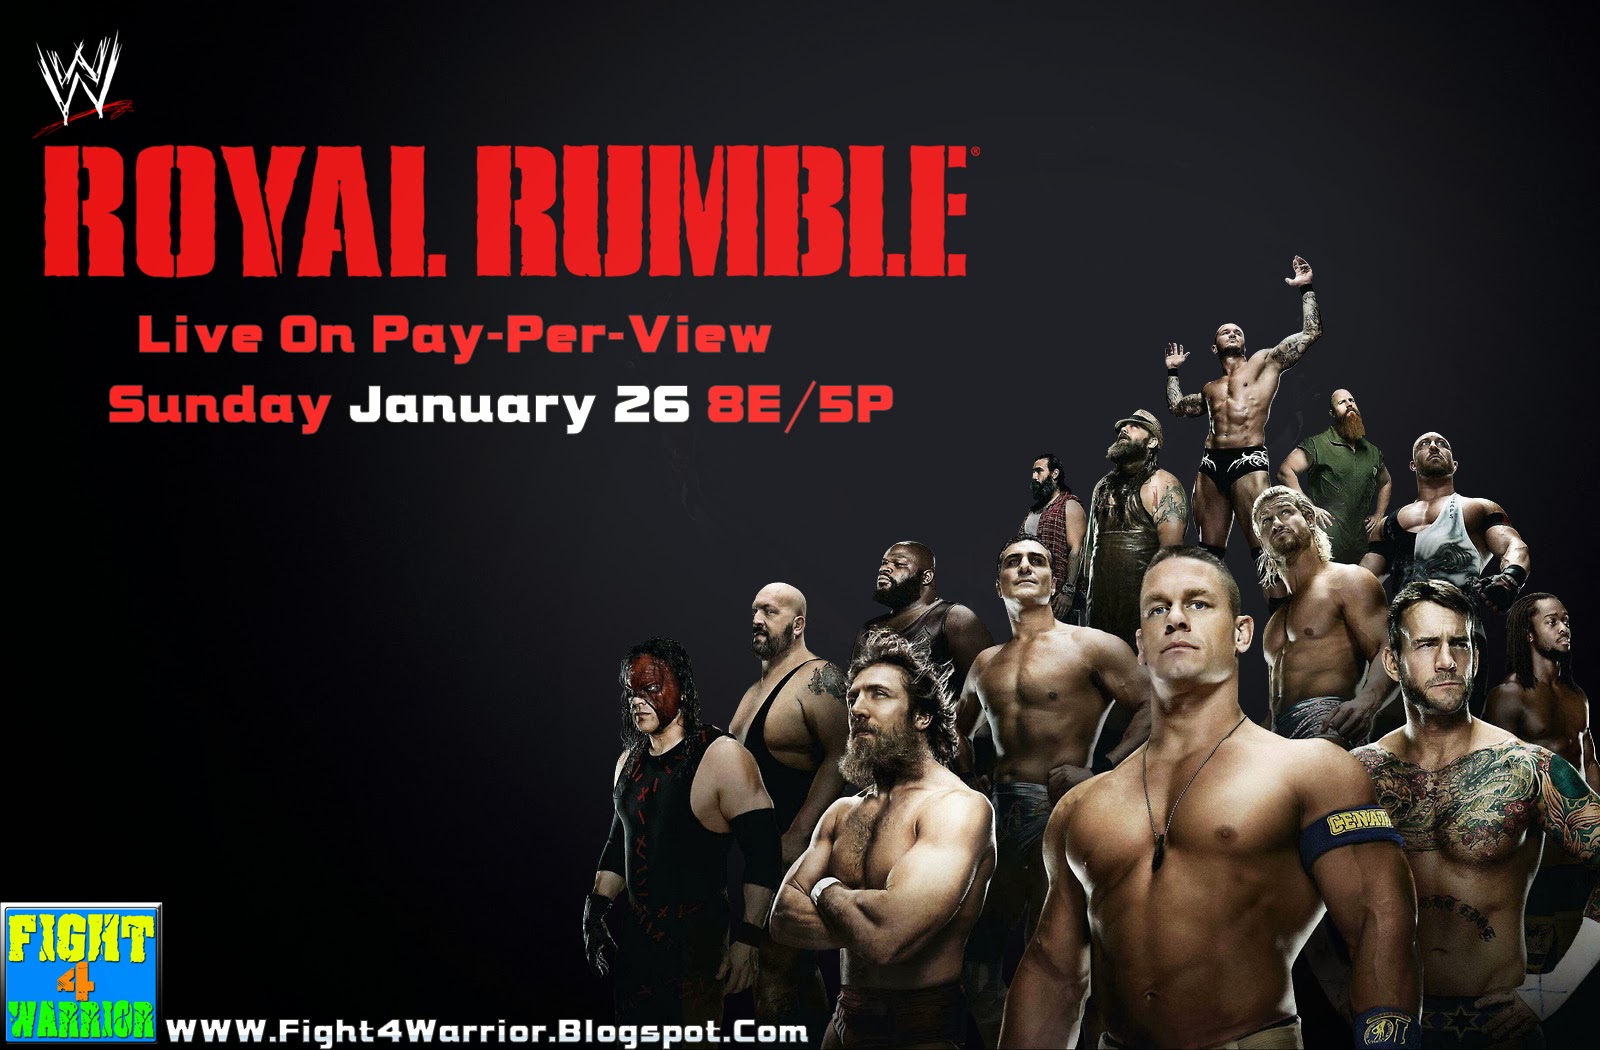 Wwe Royal Rumble 2014 Wallpaper Fight4warrior